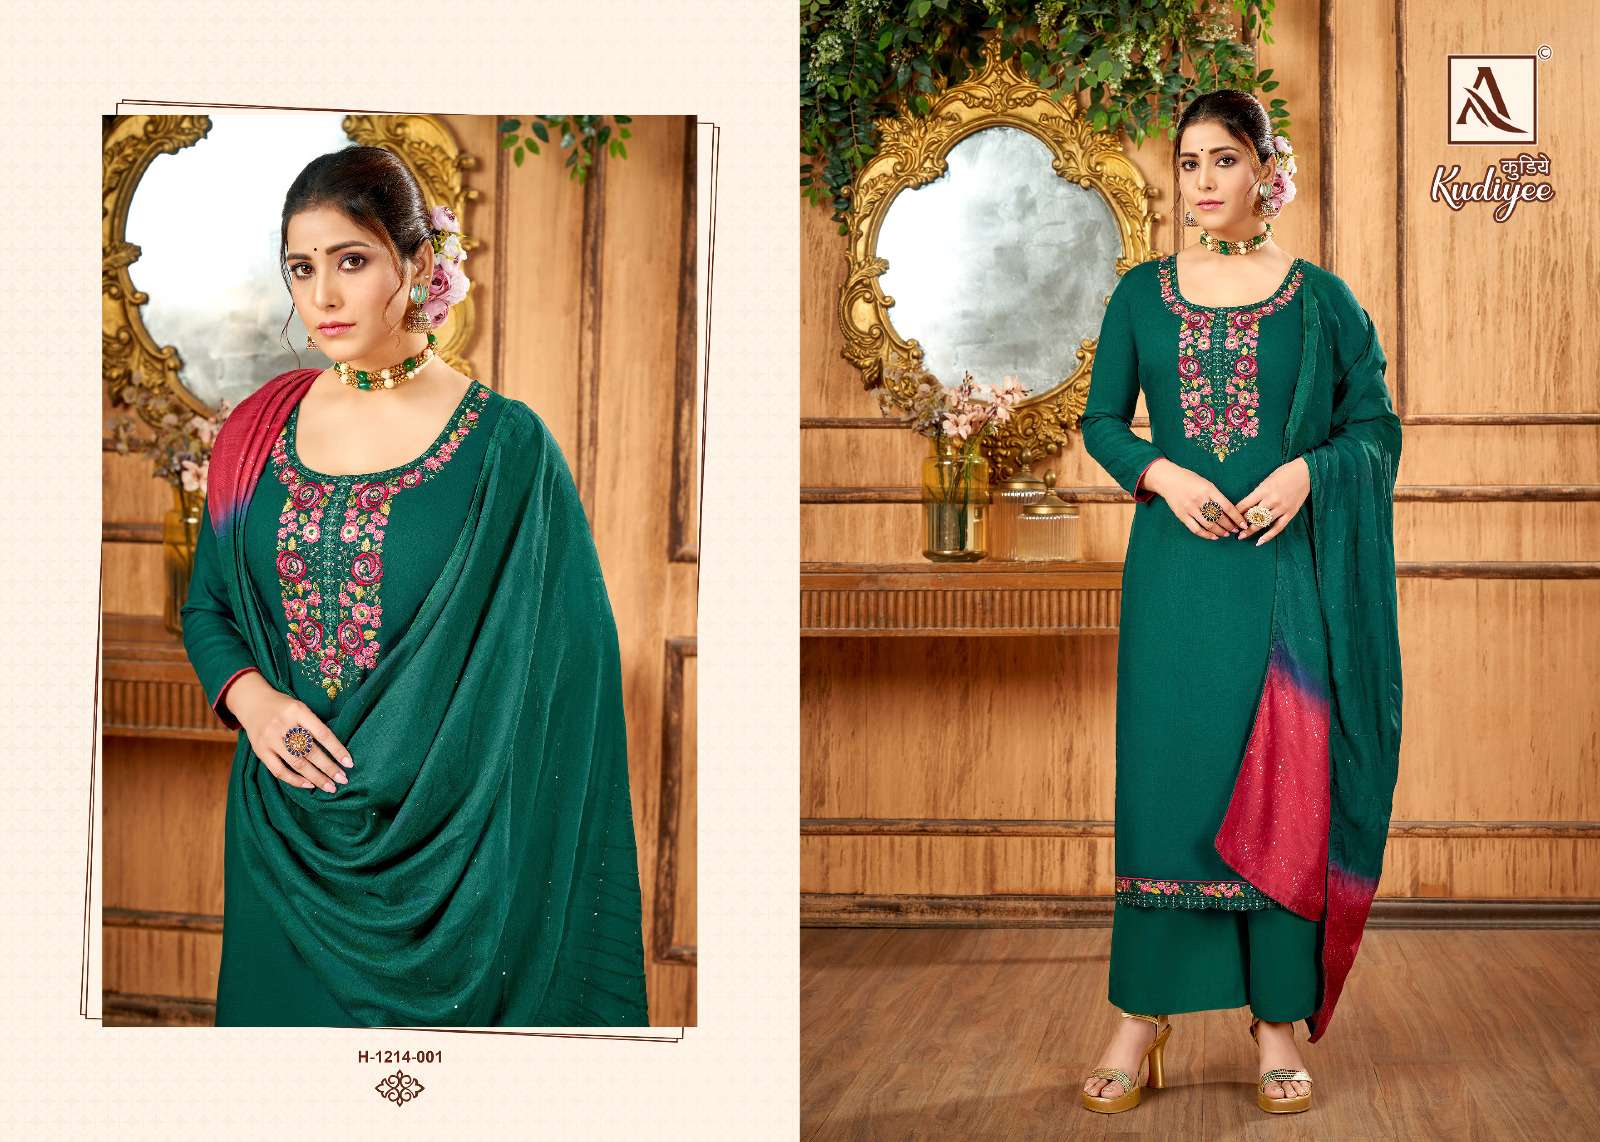 alok suit kudiyee indian designer salwar kameez catalogue online supplier surat